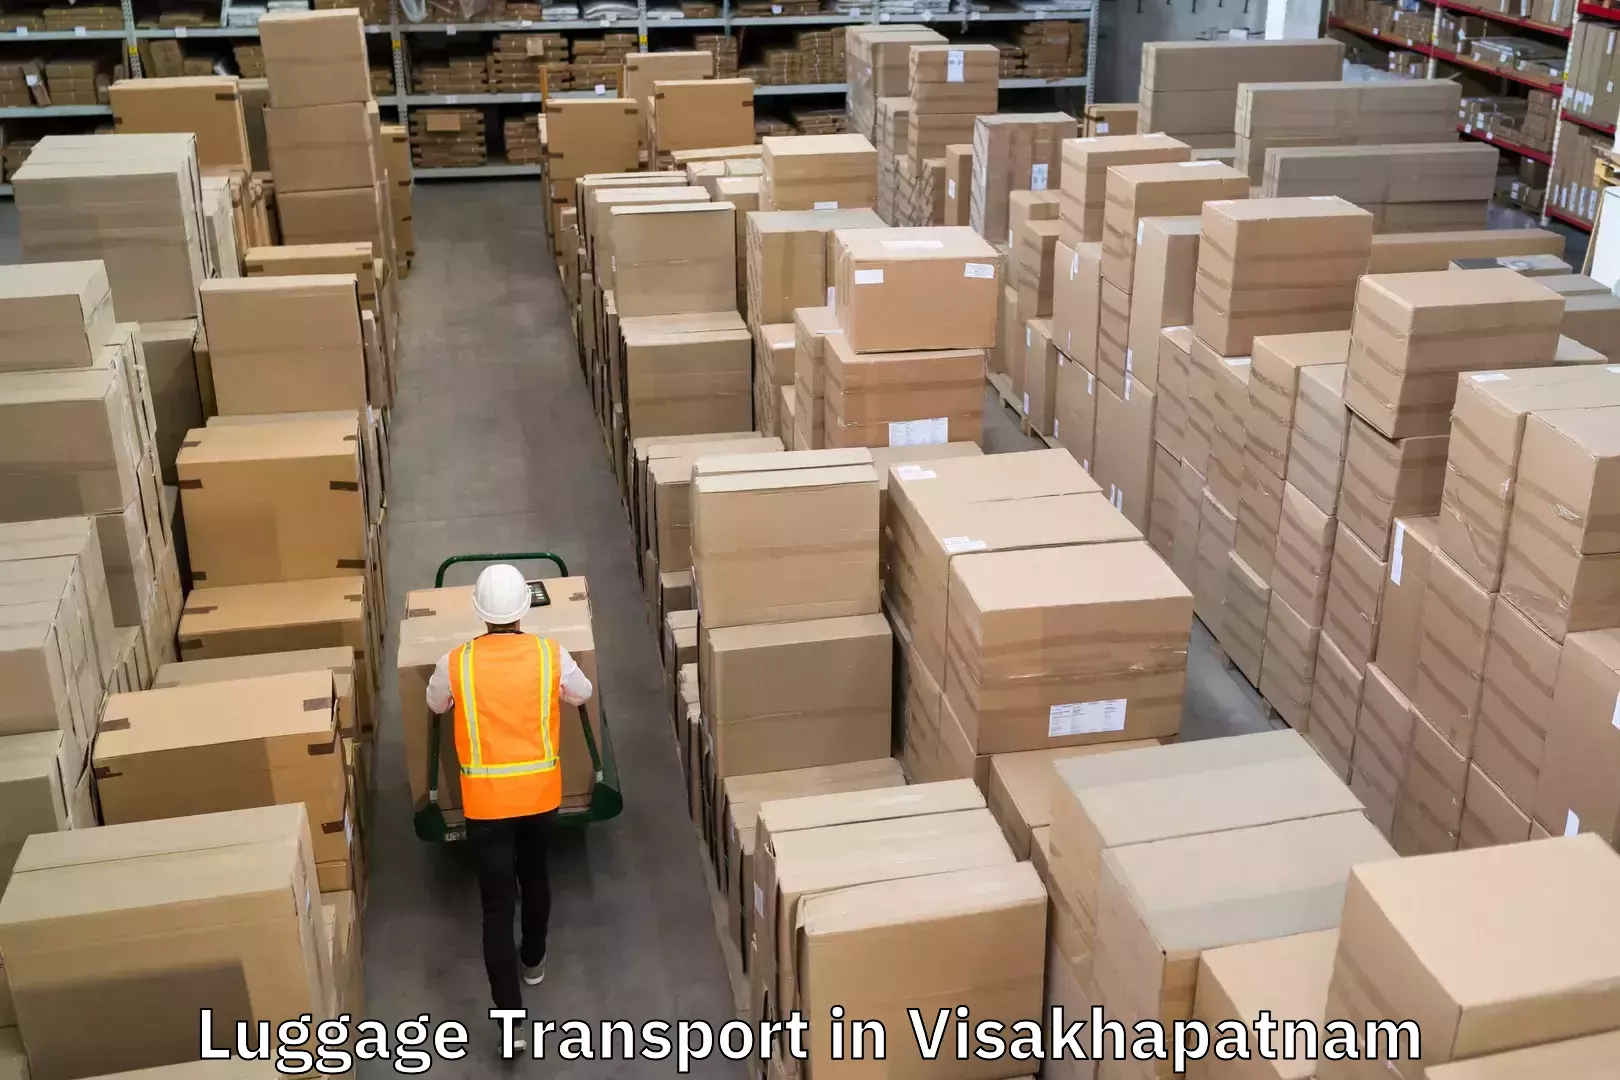 Urgent luggage shipment in Visakhapatnam